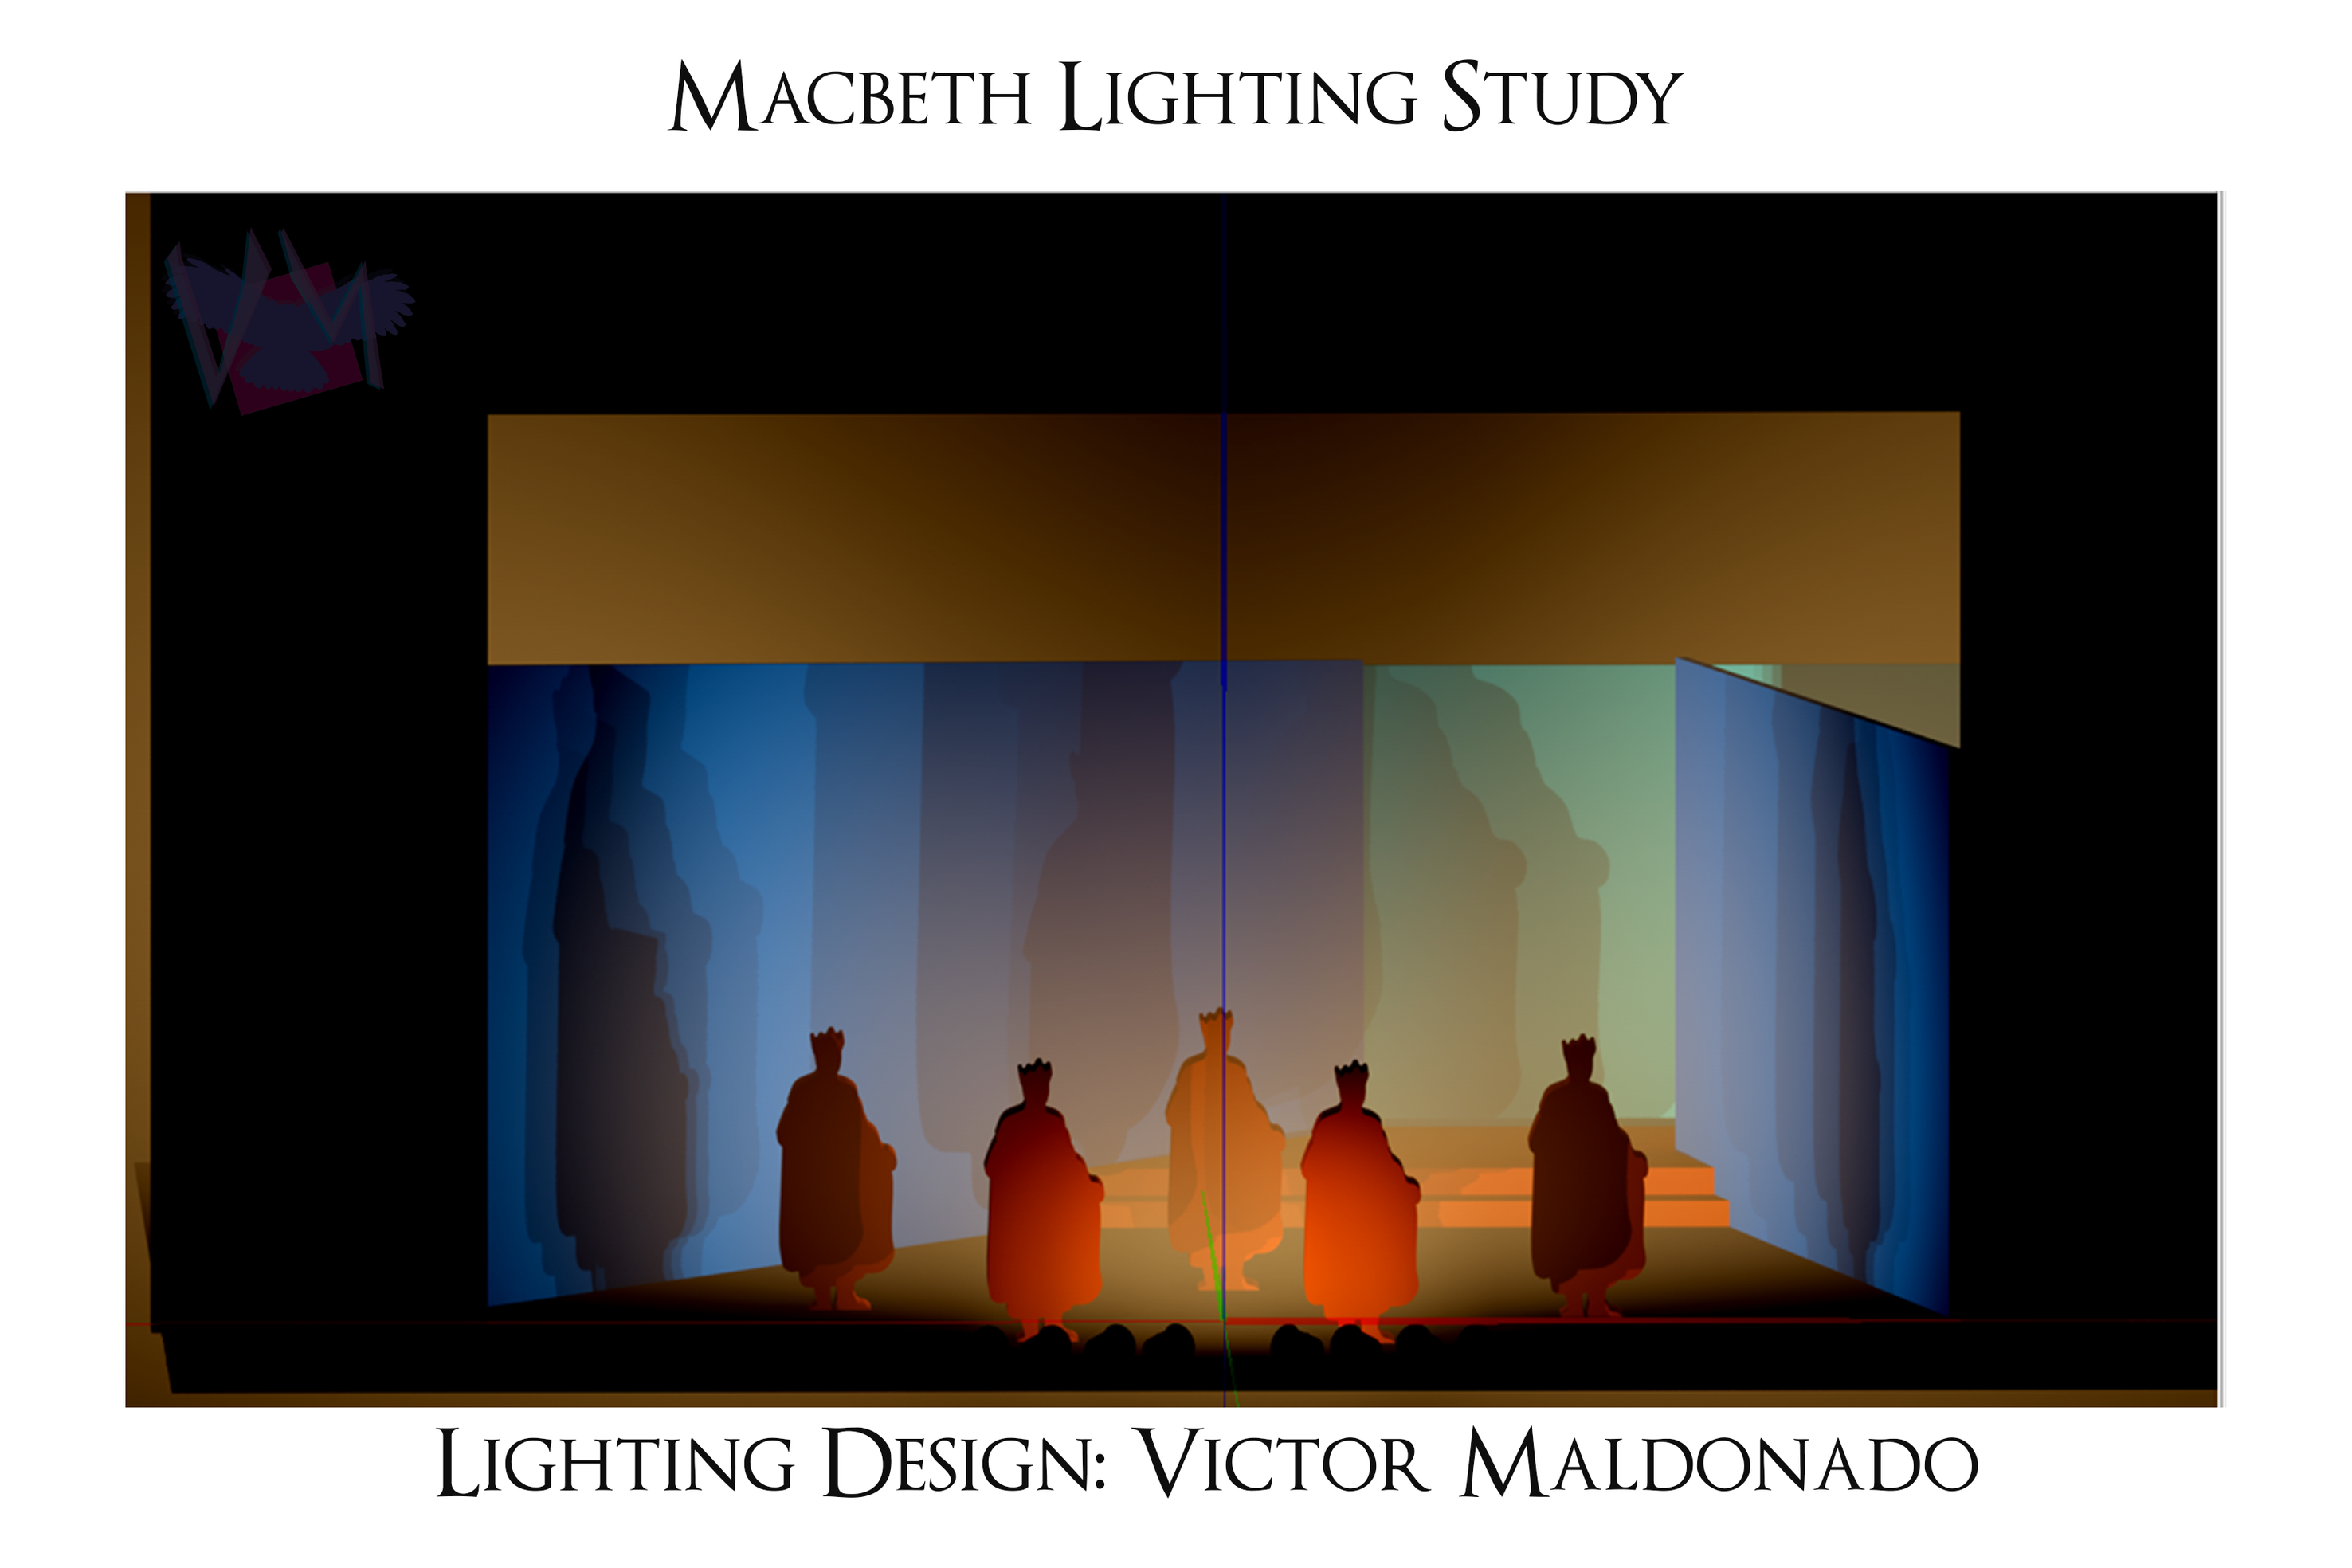 Lighting design rendering by Victor Maldonado